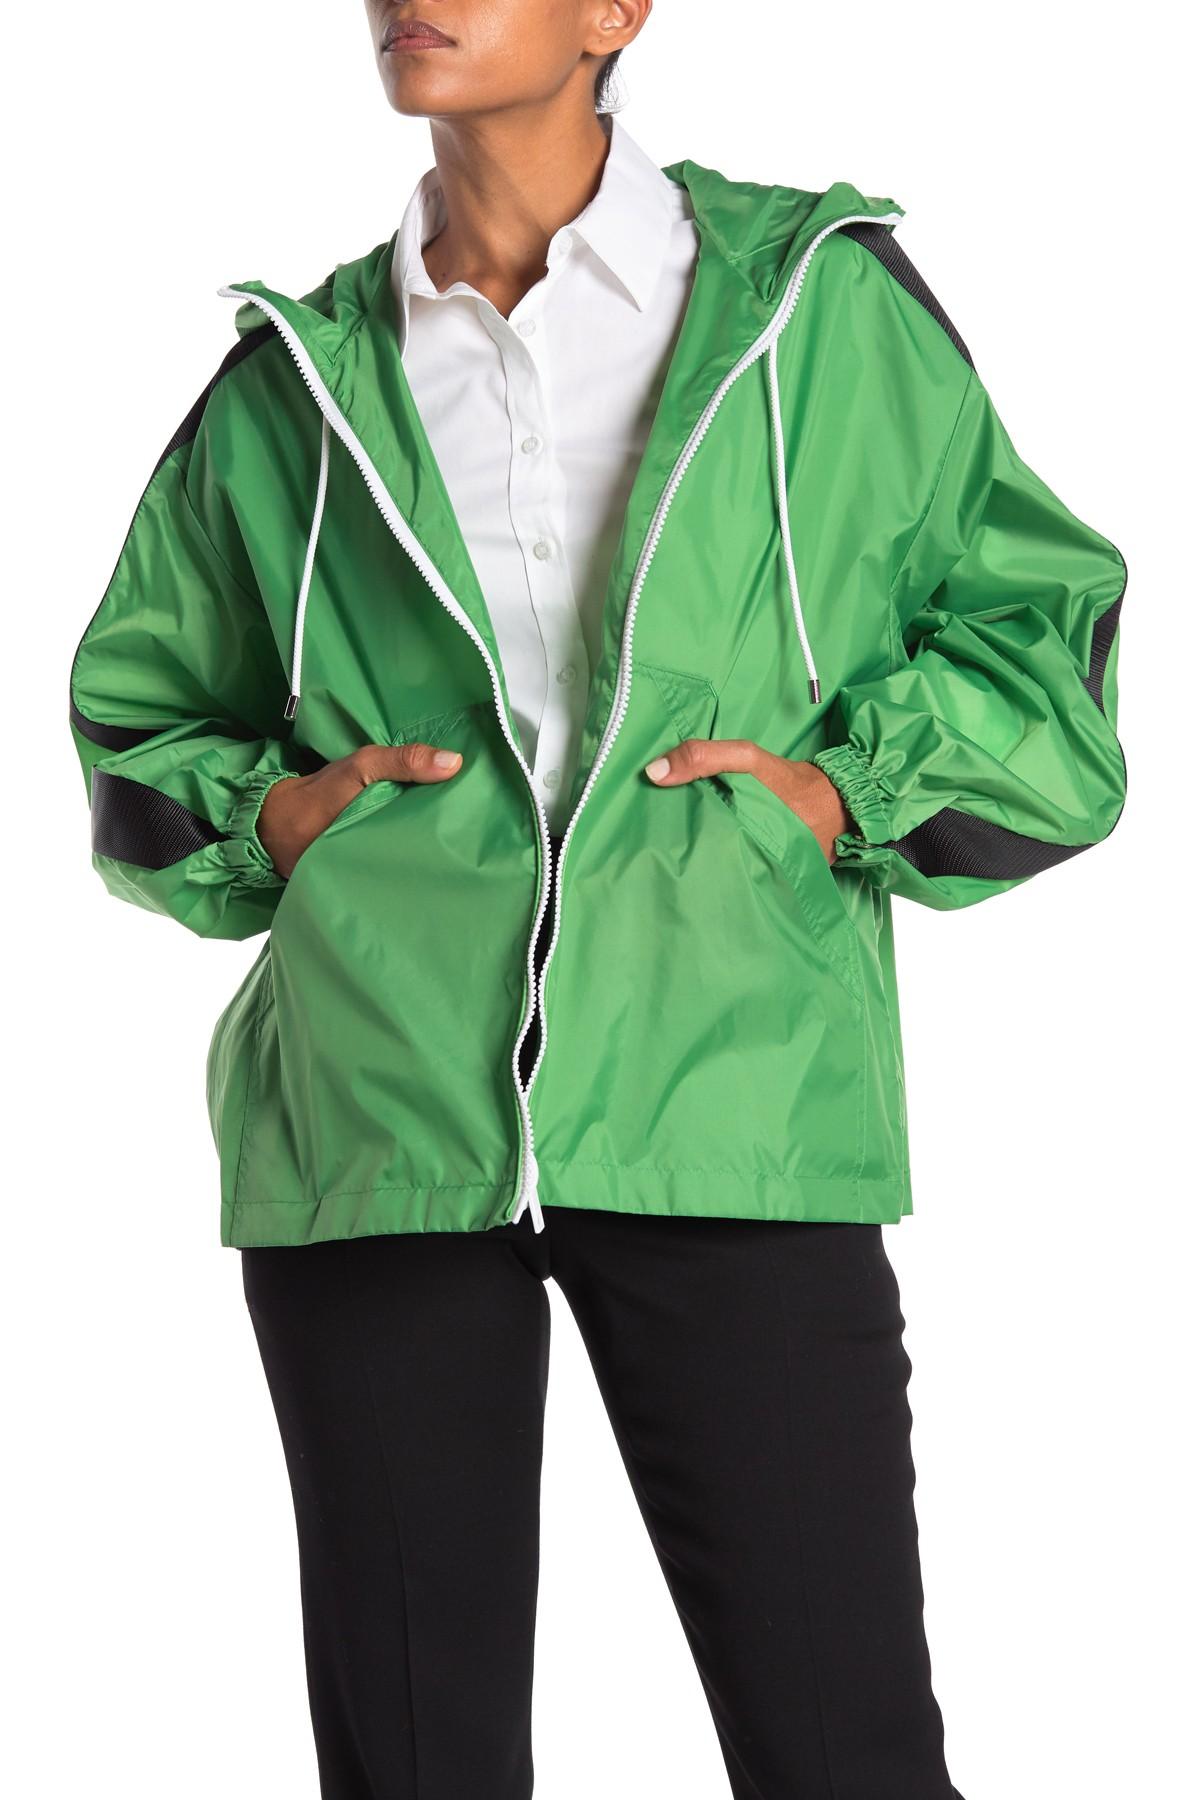 Burberry Synthetic Digbethul Nylon Windbreaker Hooded Jacket in Green - Lyst